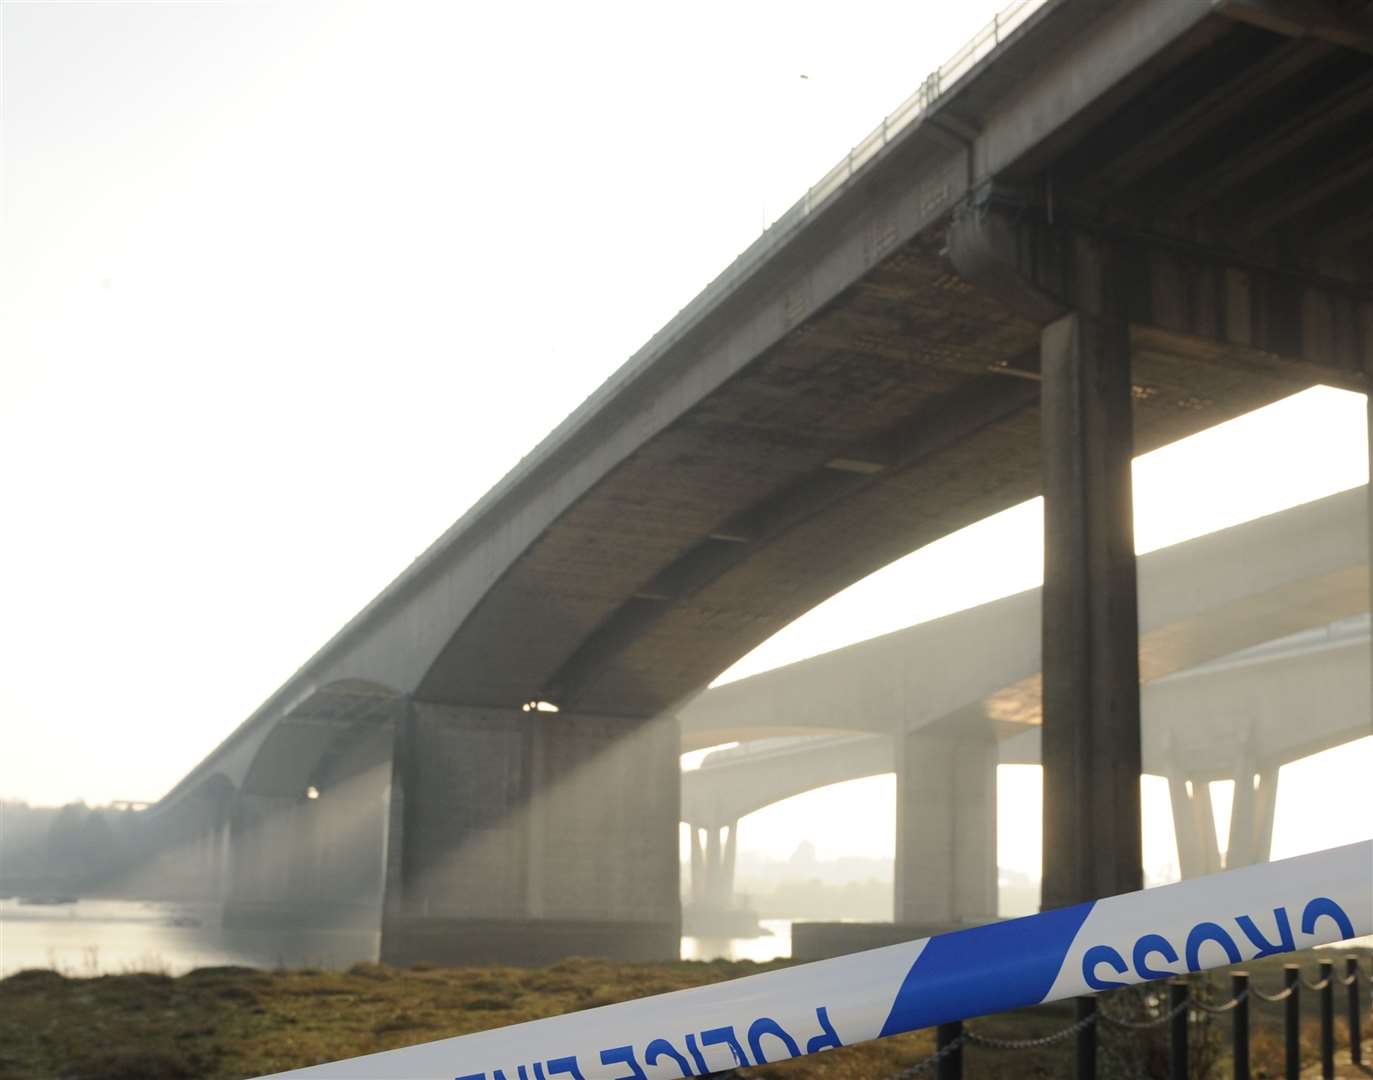 The woman fell from the M2 bridge last night